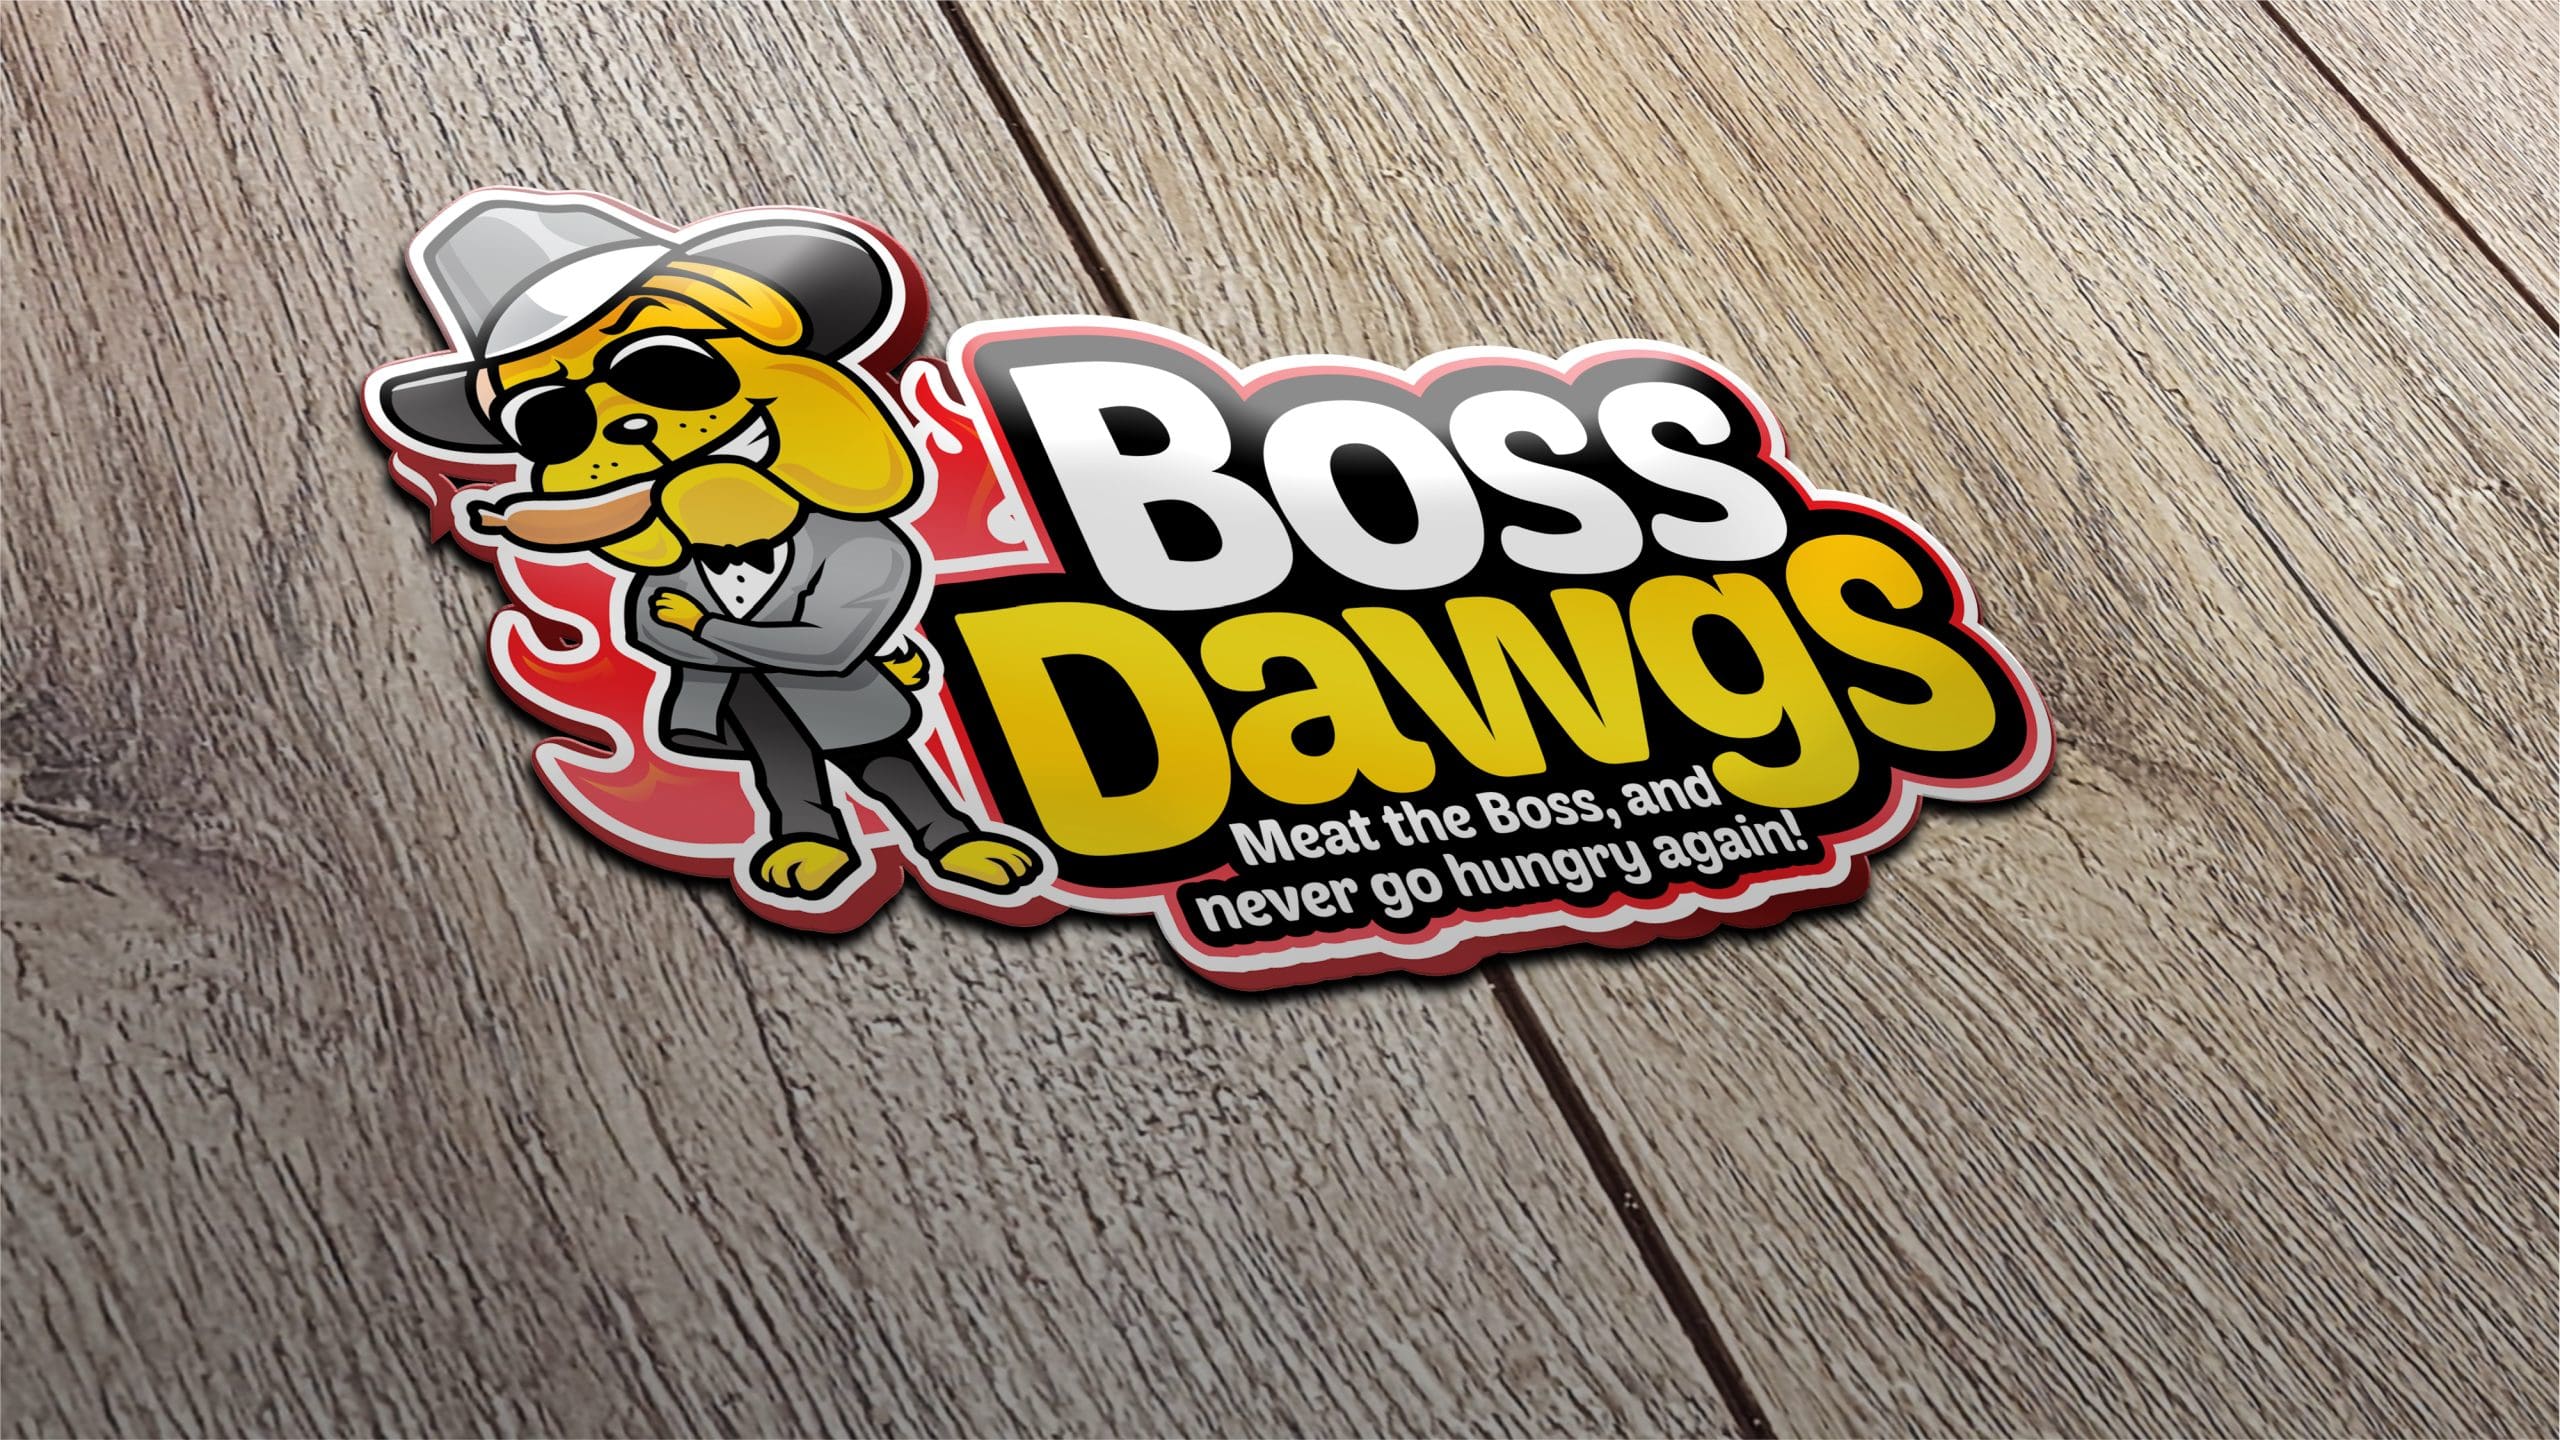 Boss Dawgs – Company Branding